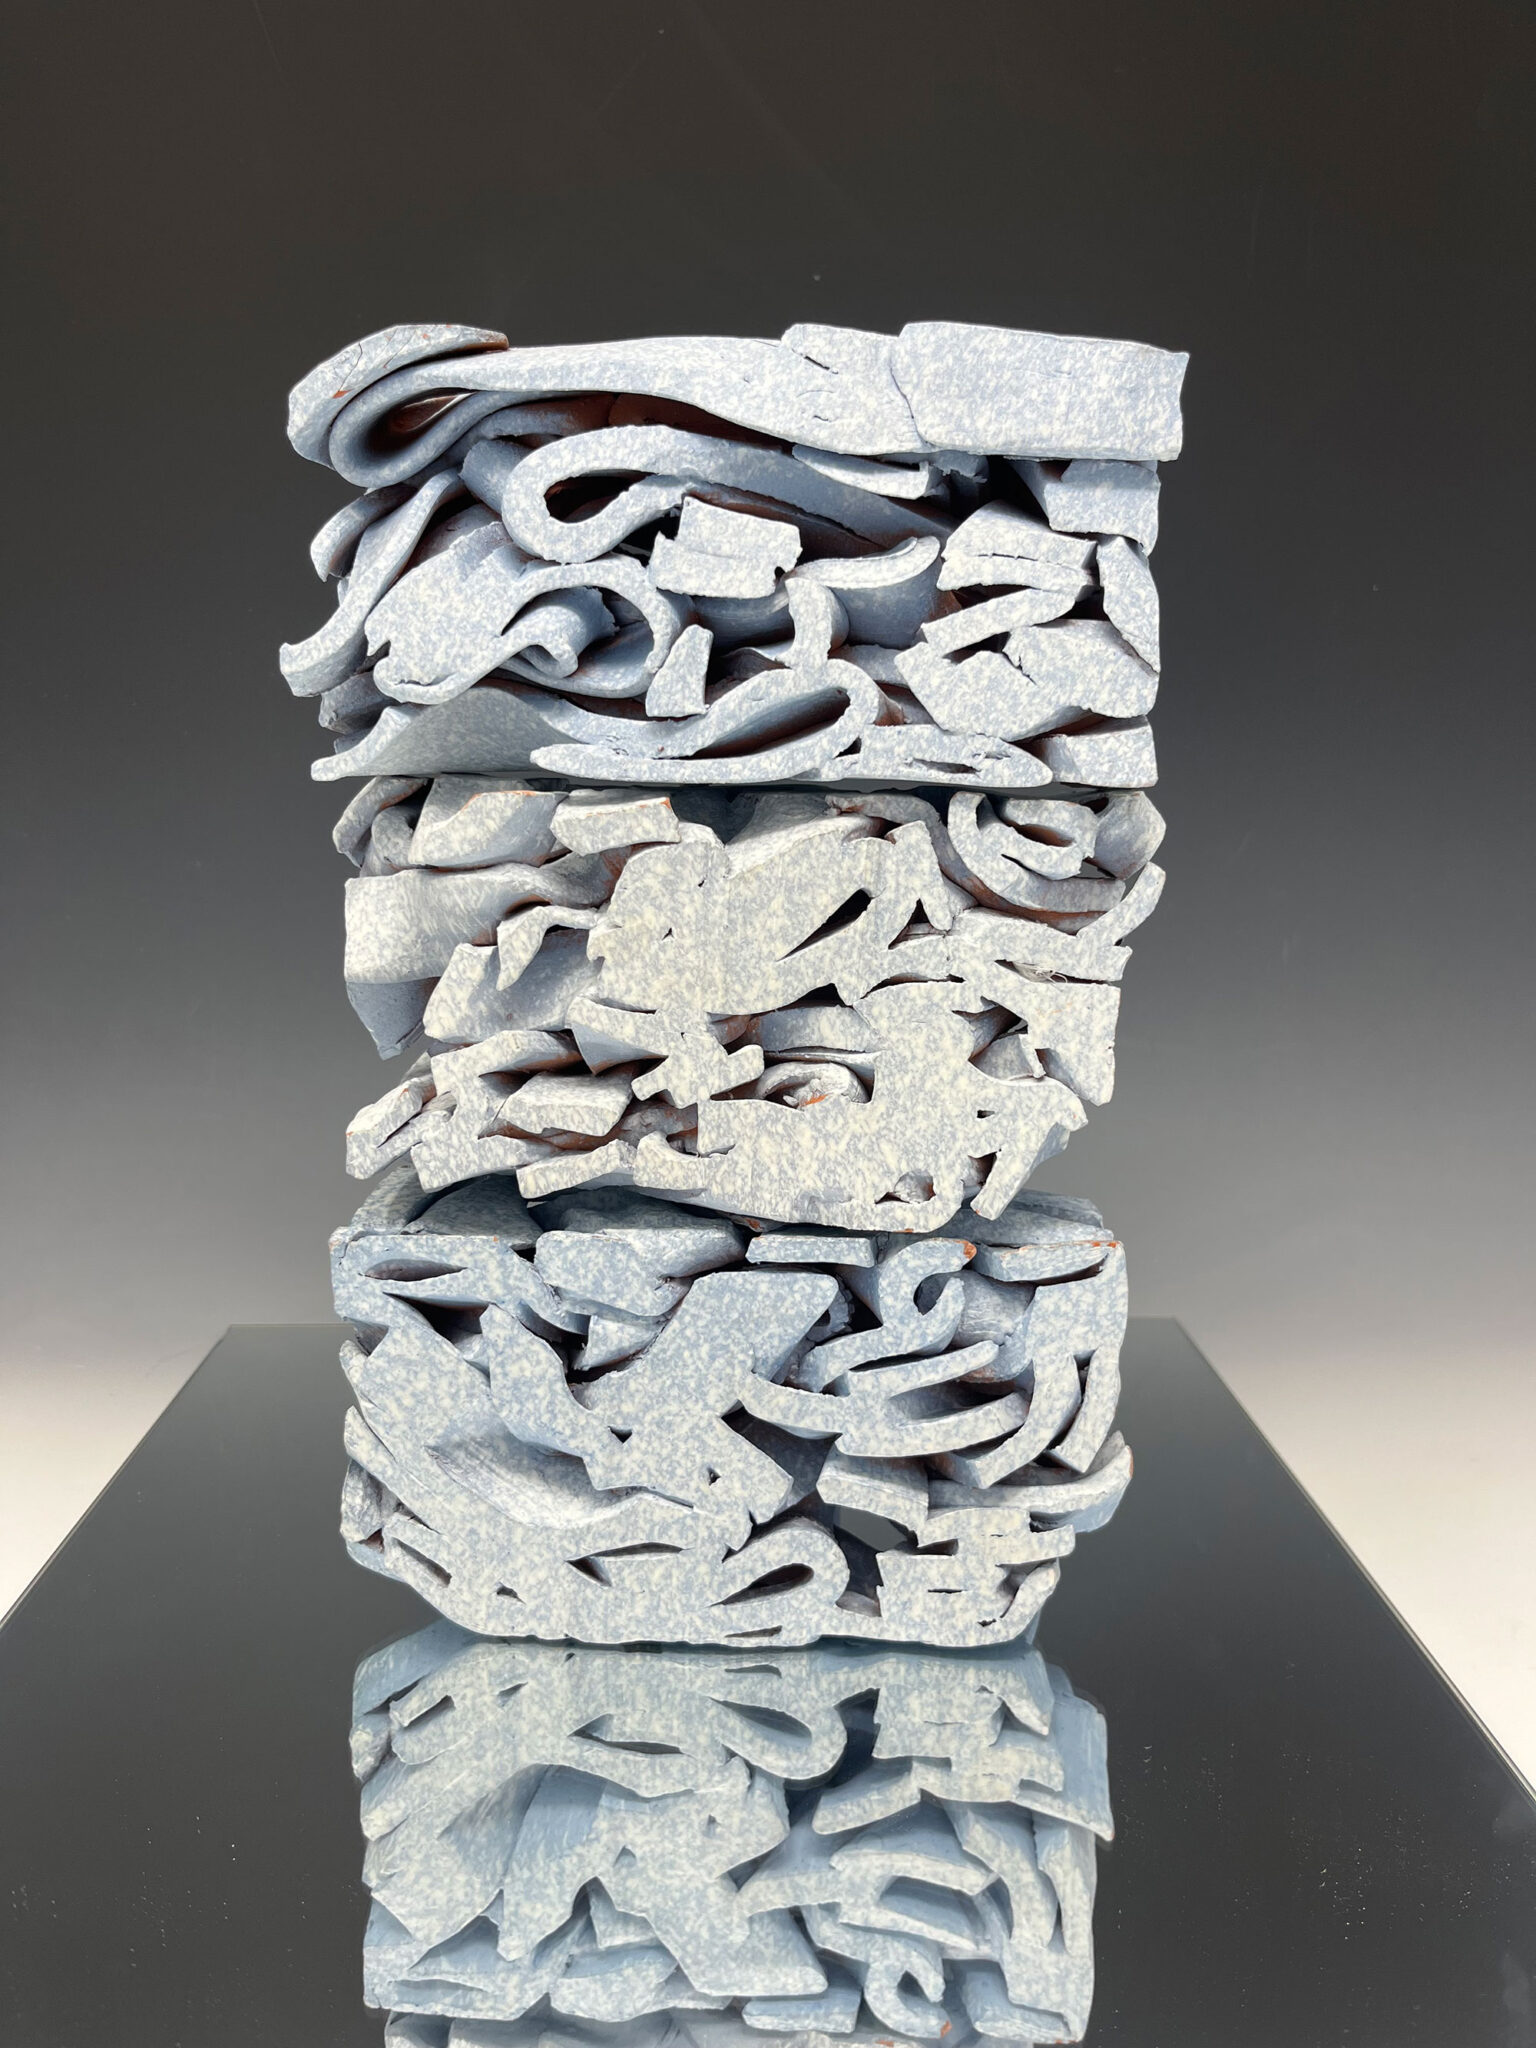 Irina Bondarenko created this work called “Reflection,” the result of discarded pieces of cylinders. (Photo by Irina Bondarenko)